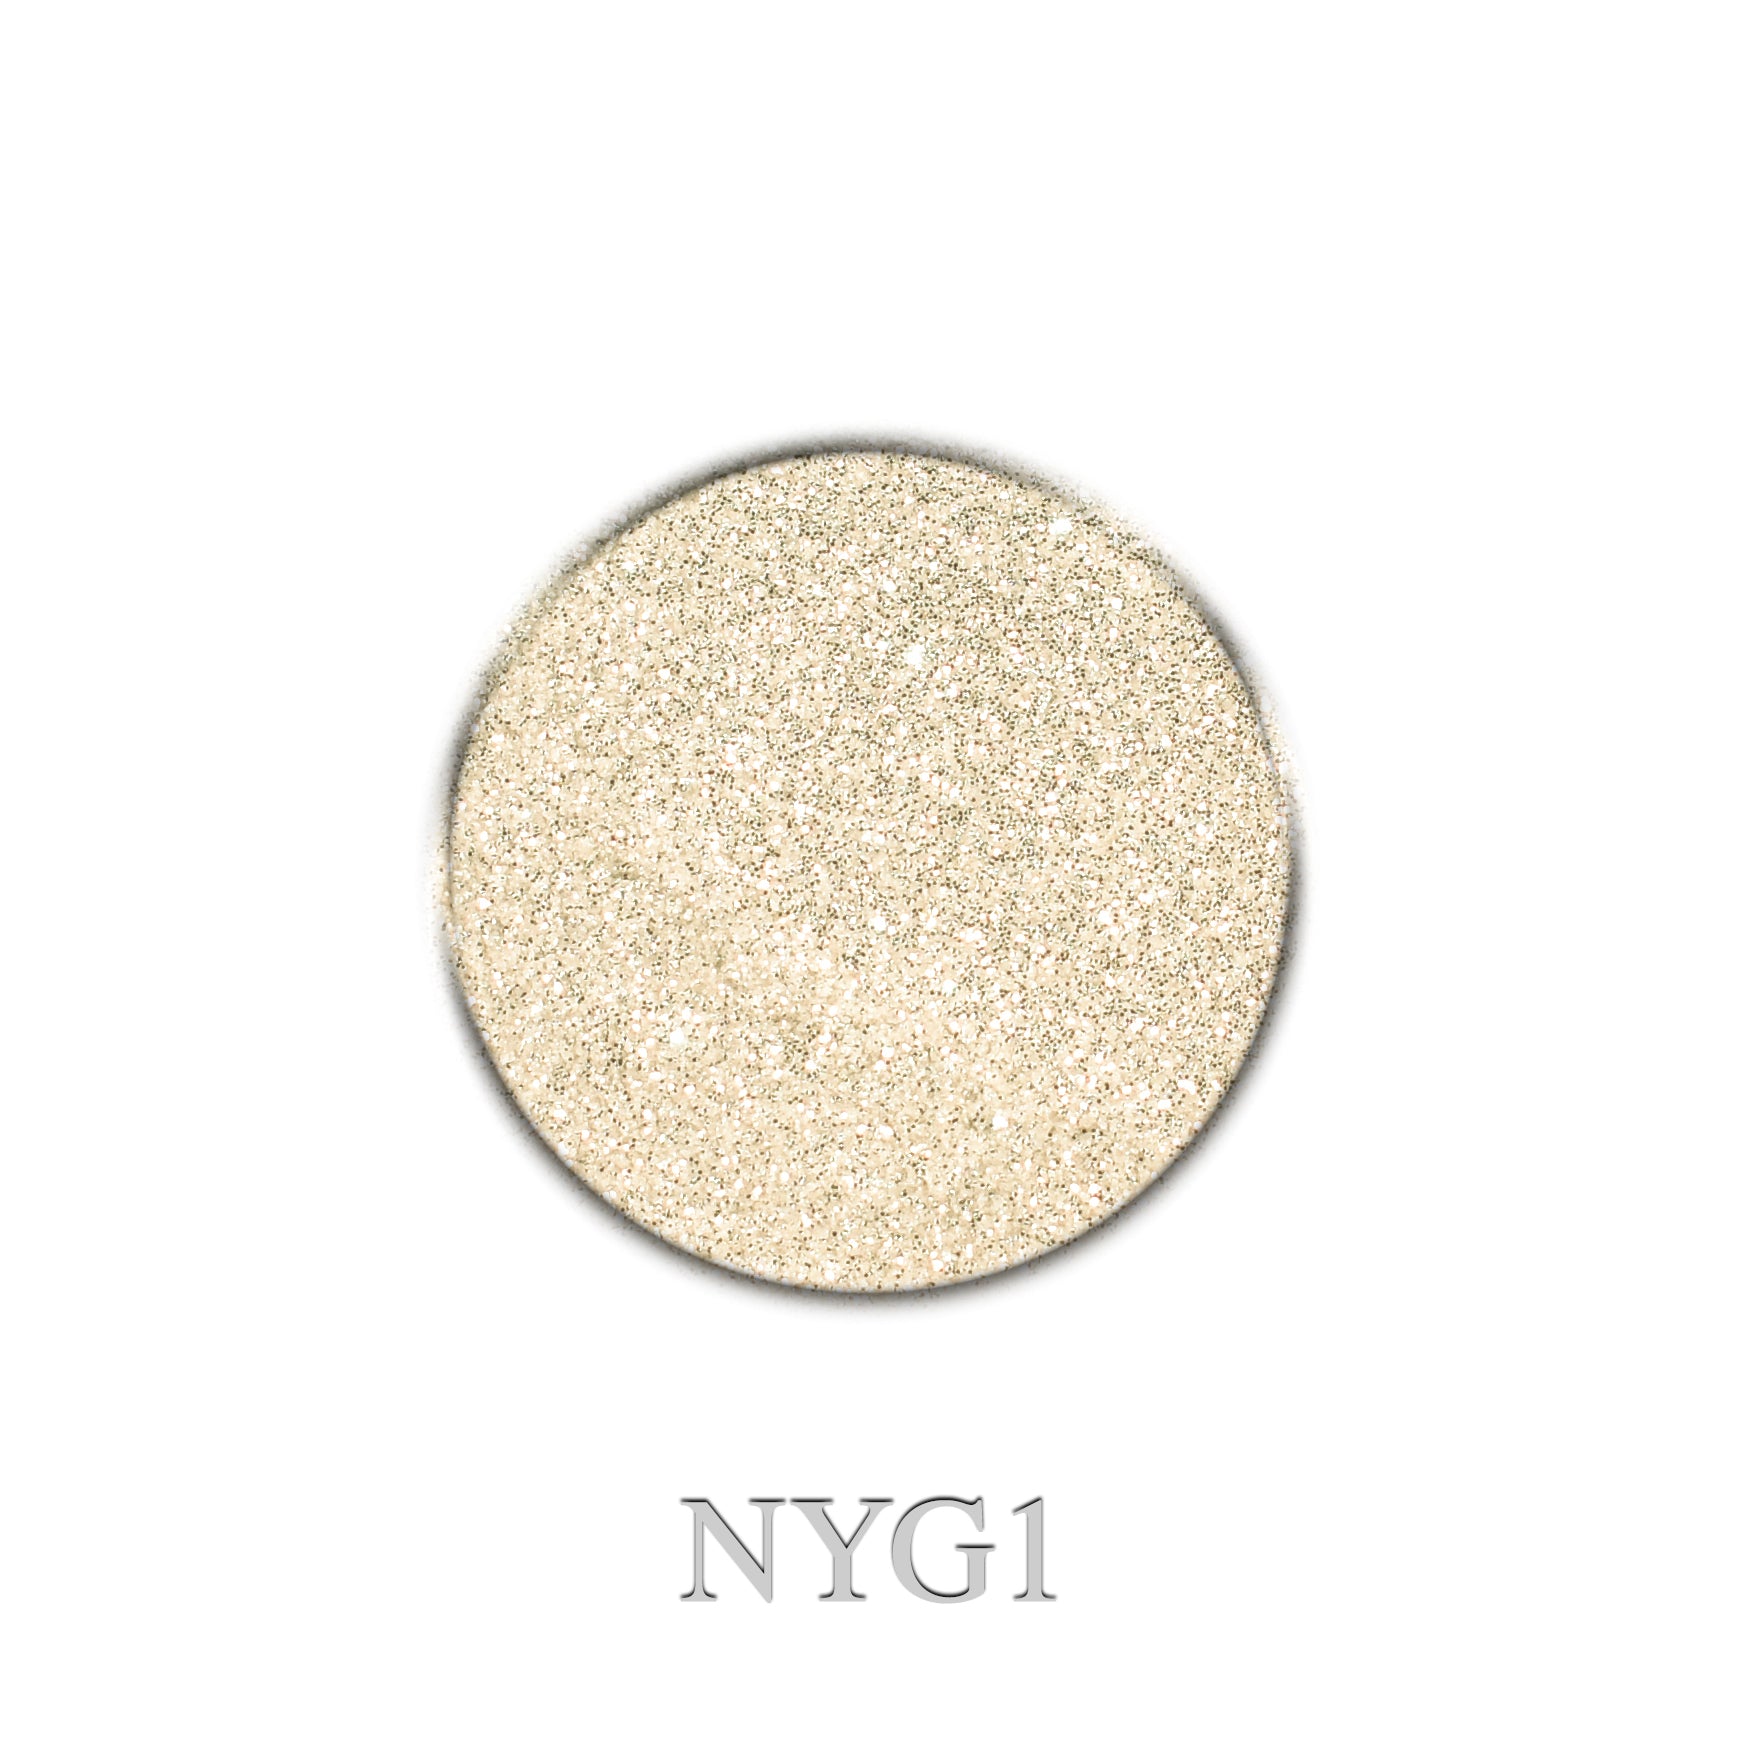 New Yorker Glitter NYG1